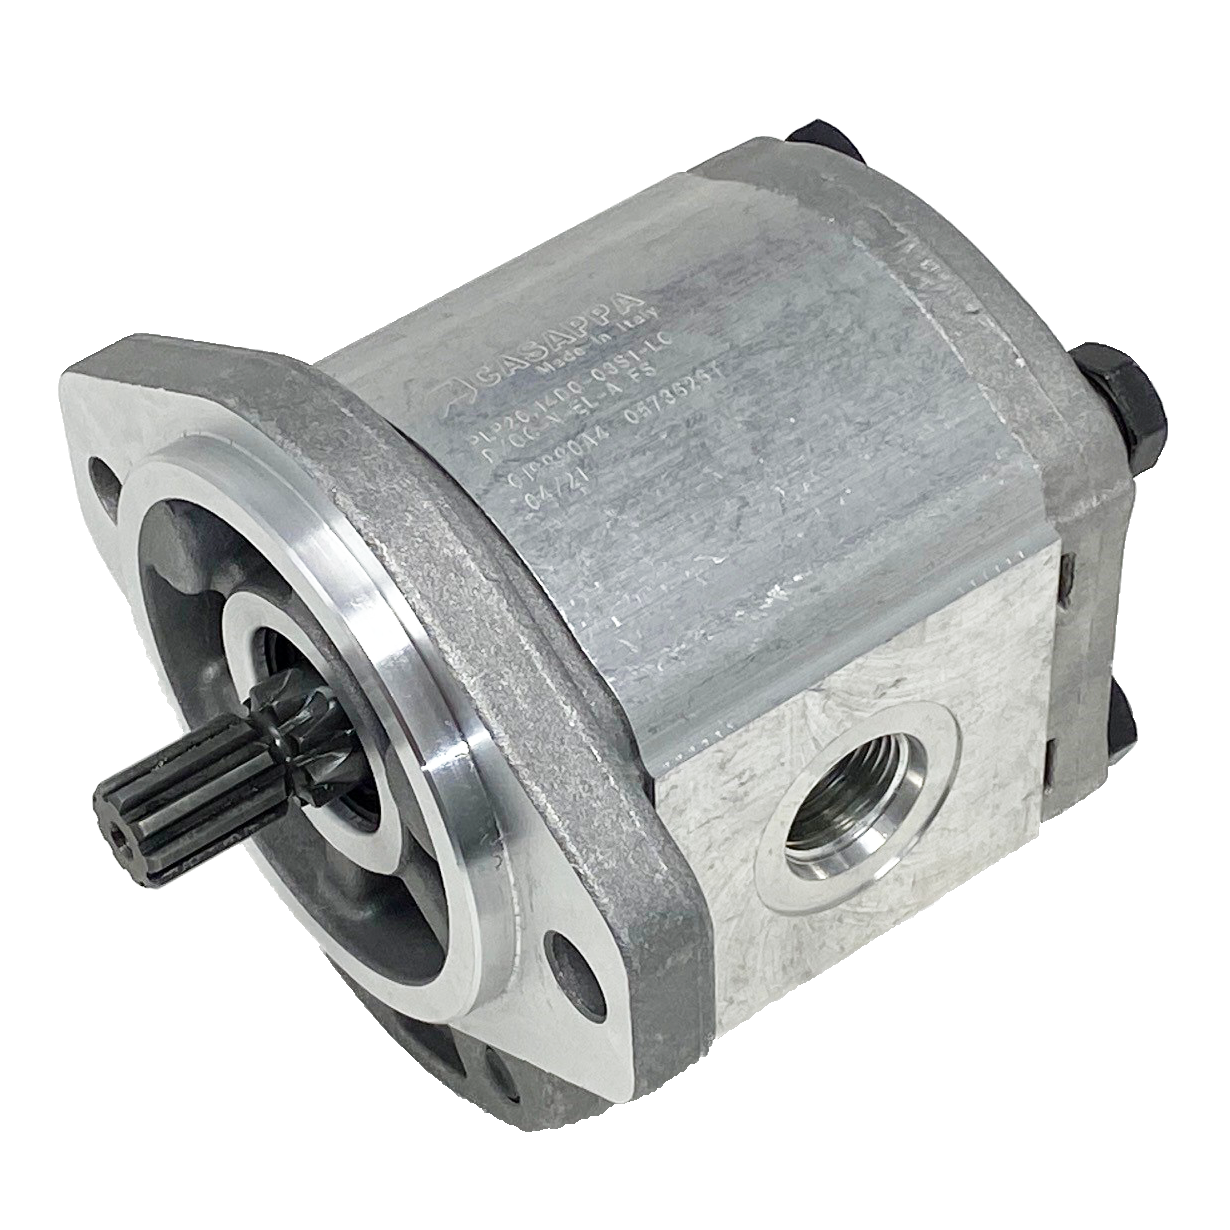 PLM20.16B0-03S1-LOC/OD-N-EL : Casappa Polaris Gear Motor, 16.85cc, 3625psi Rated, 3000RPM, Reversible Interior Drain, 9T 16/32dp Shaft, SAE A 2-Bolt Flange, 0.625 (5/8") #10 SAE Inlet, 0.75 (3/4") #12 SAE Outlet, Aluminum Body & Flange